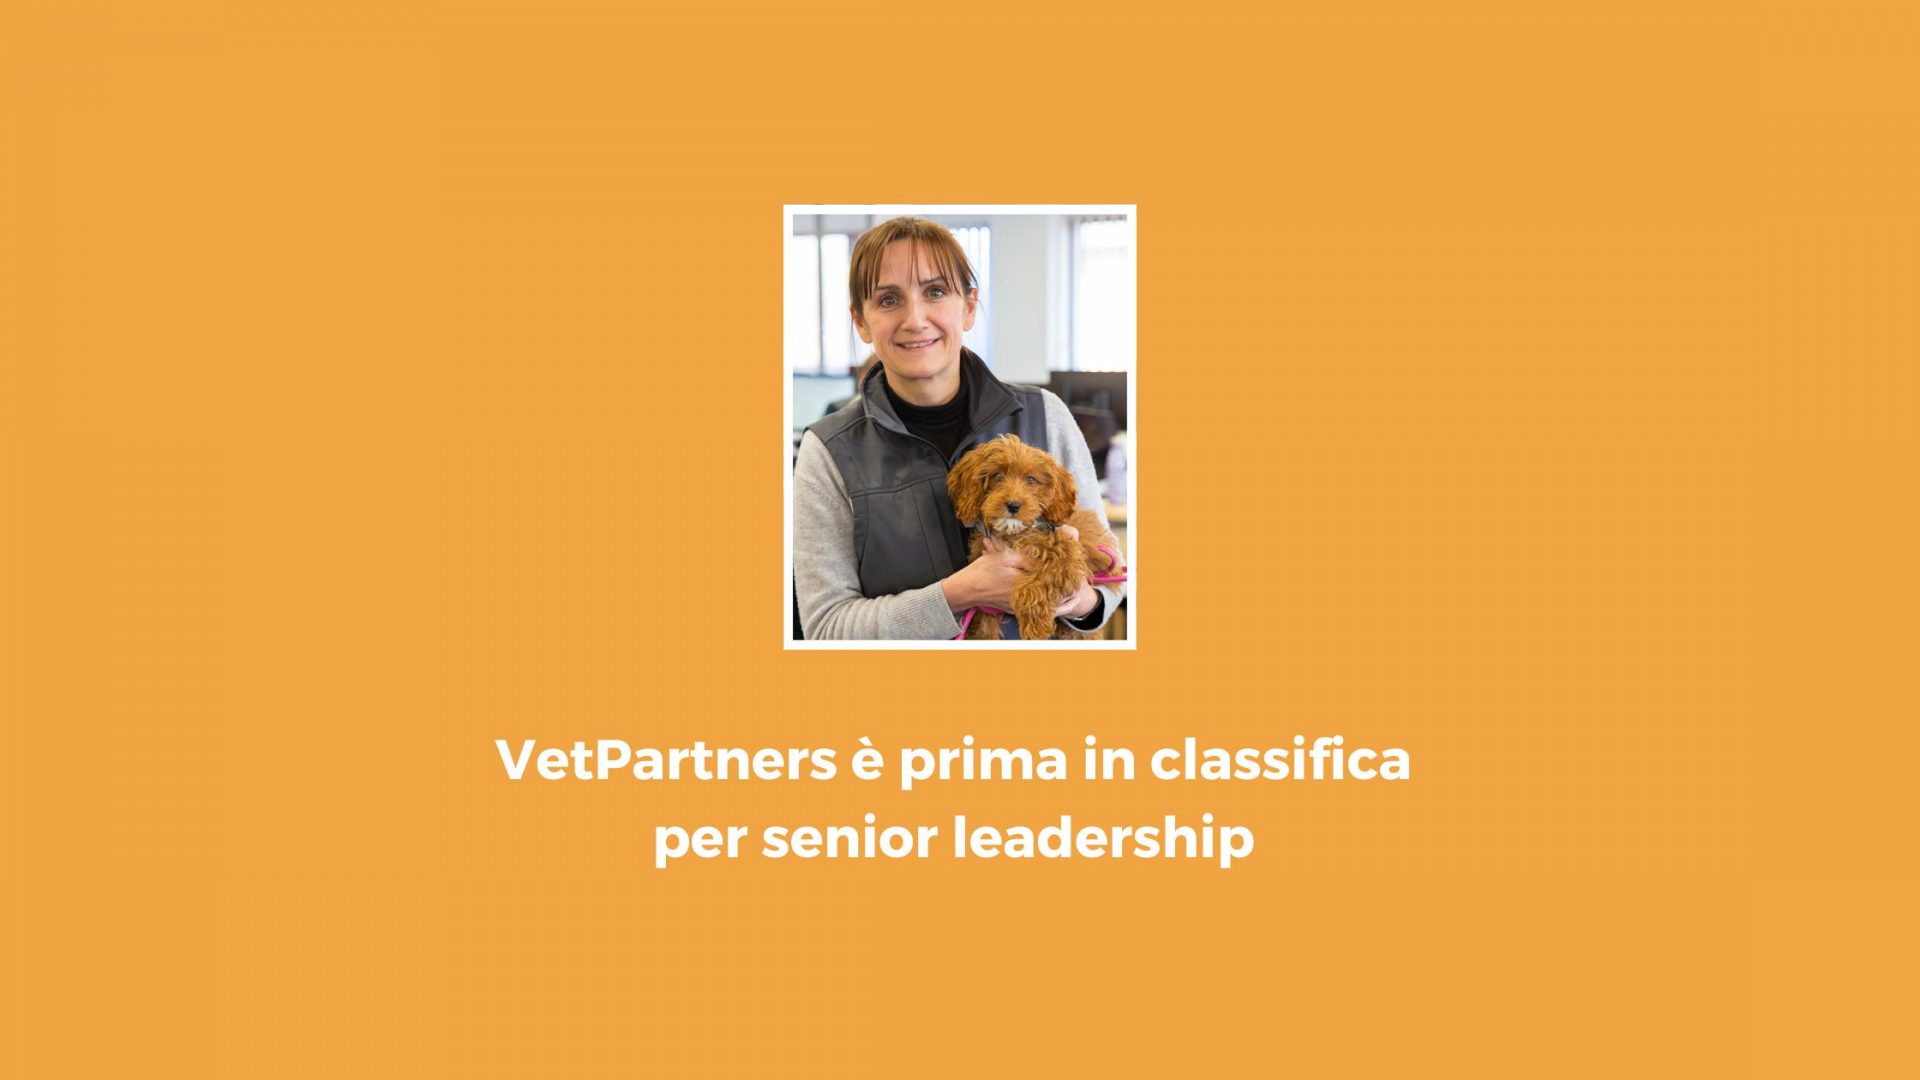 VetPartners è prima in classifica per senior leadership